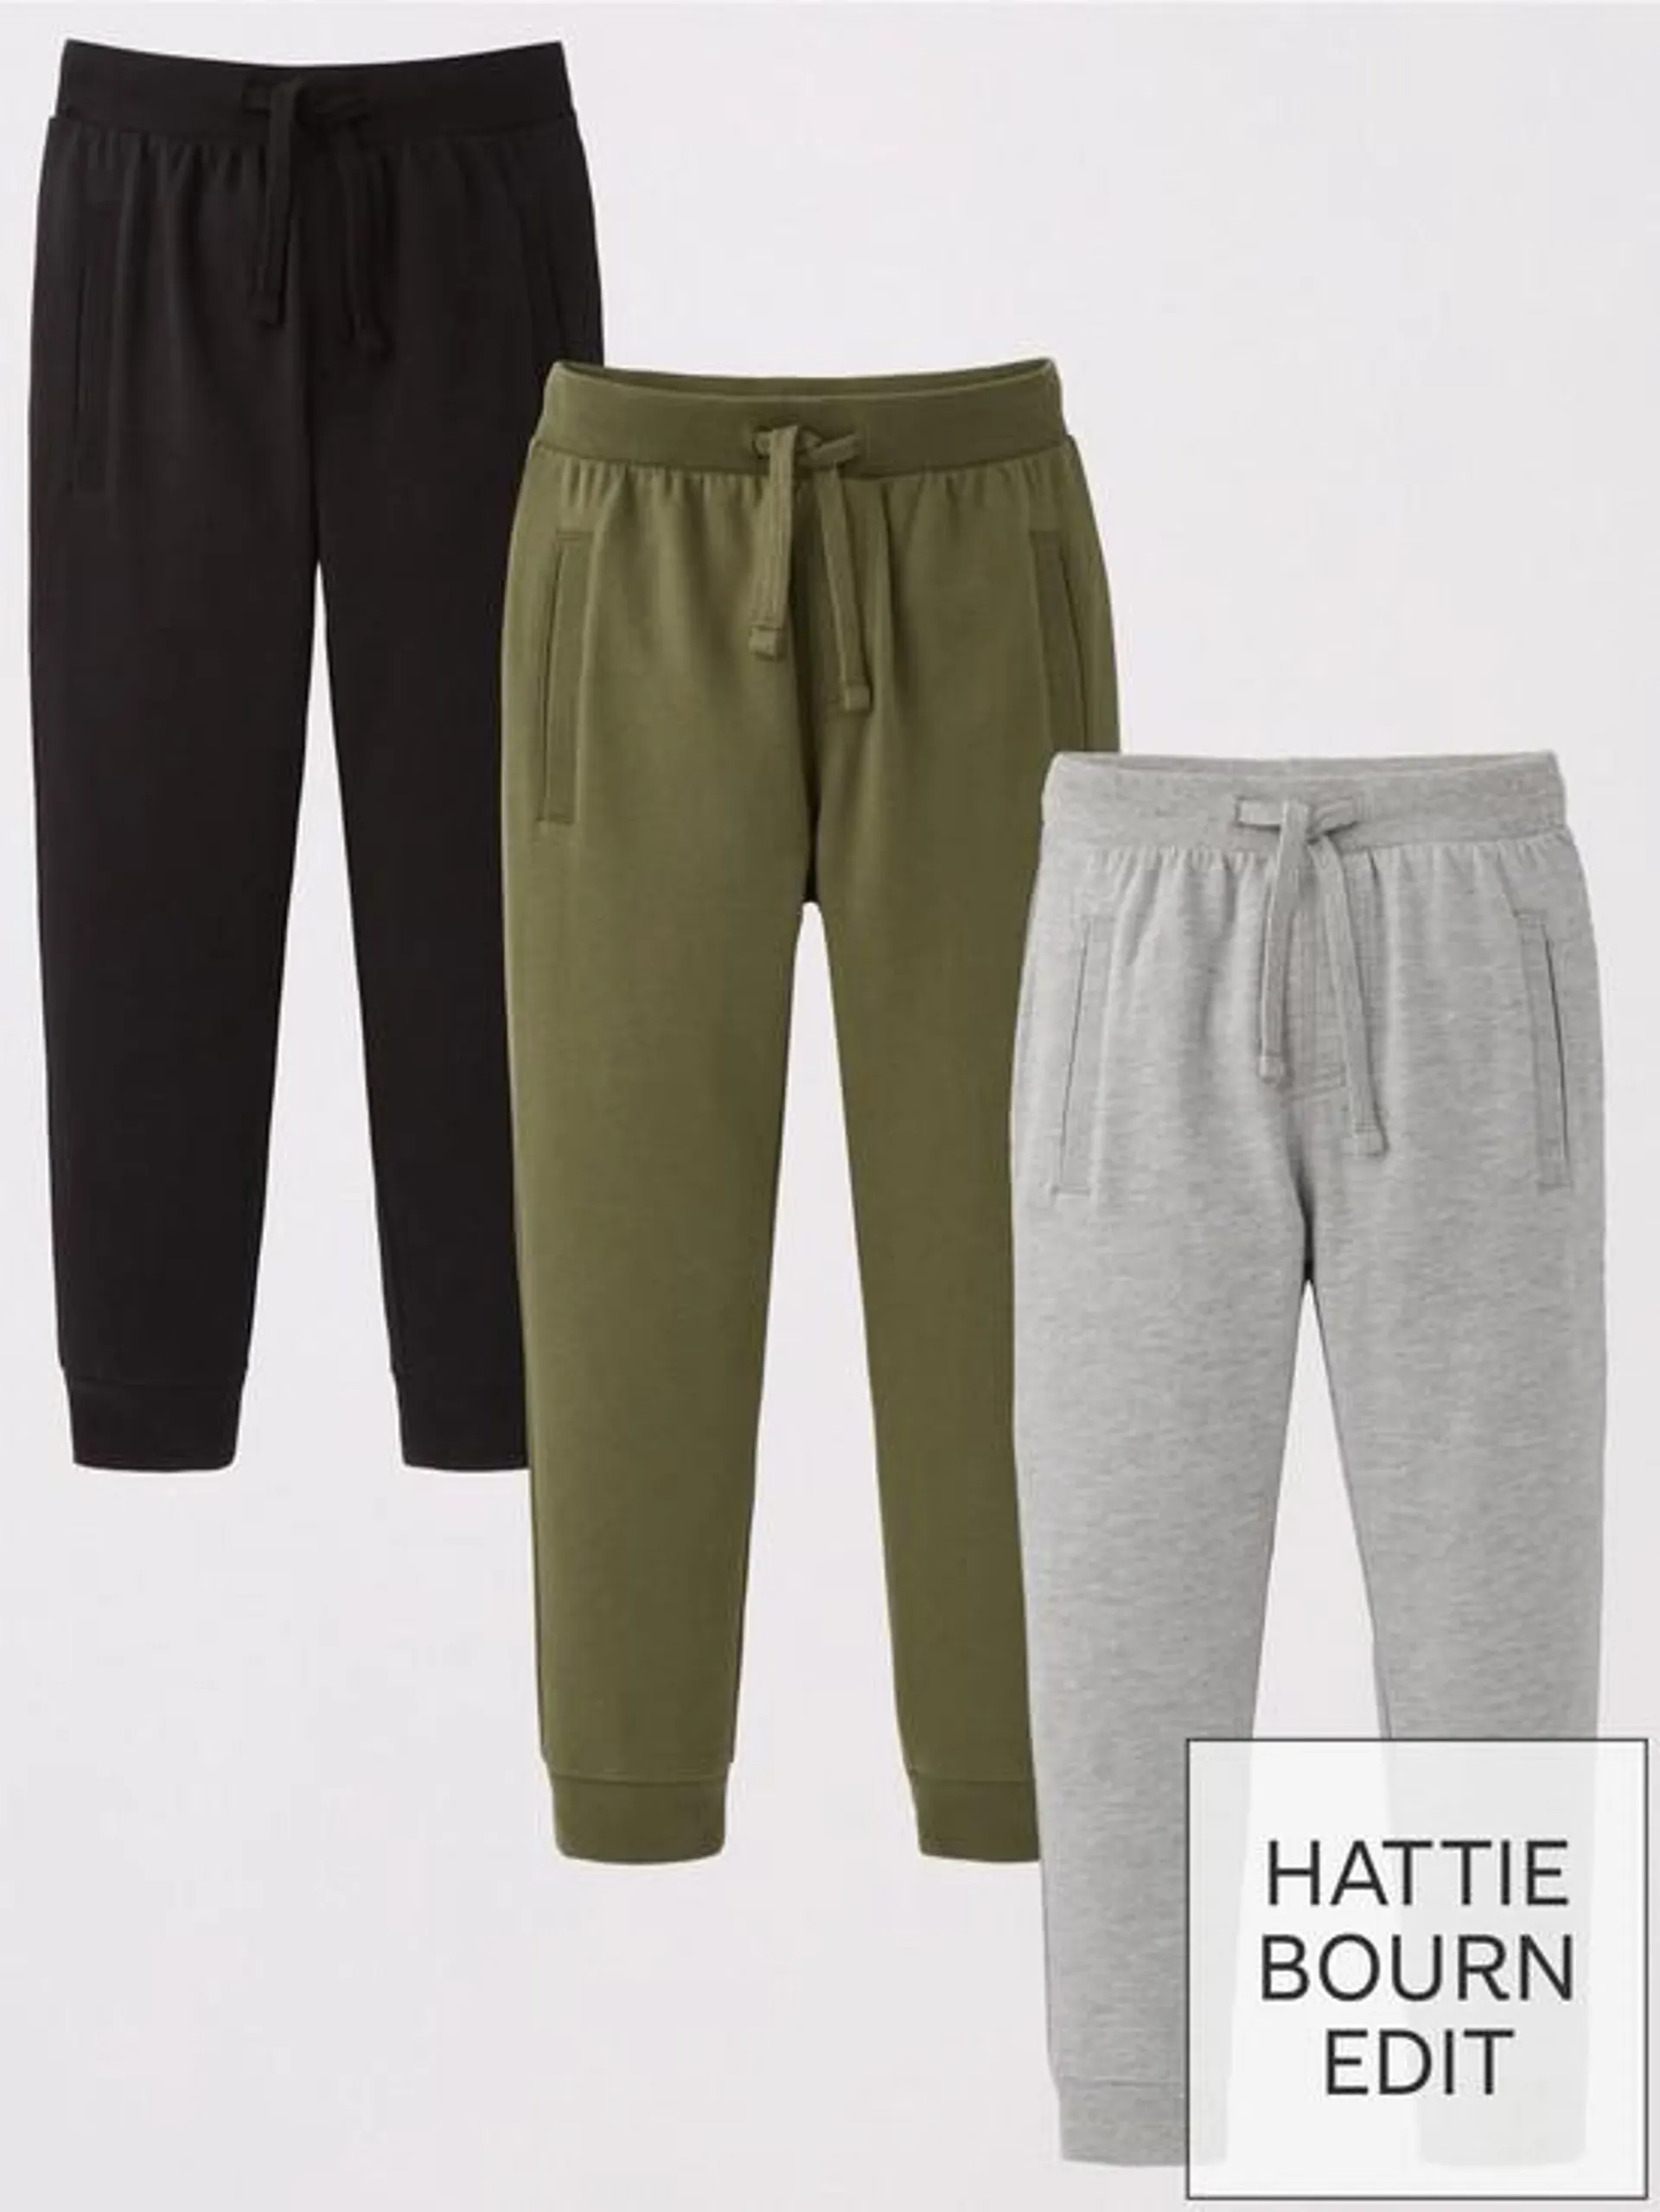 Everyday X Hattie Bourn Boys Cotton Rich 3 Pack Joggers - Black/Charcoal/Khaki